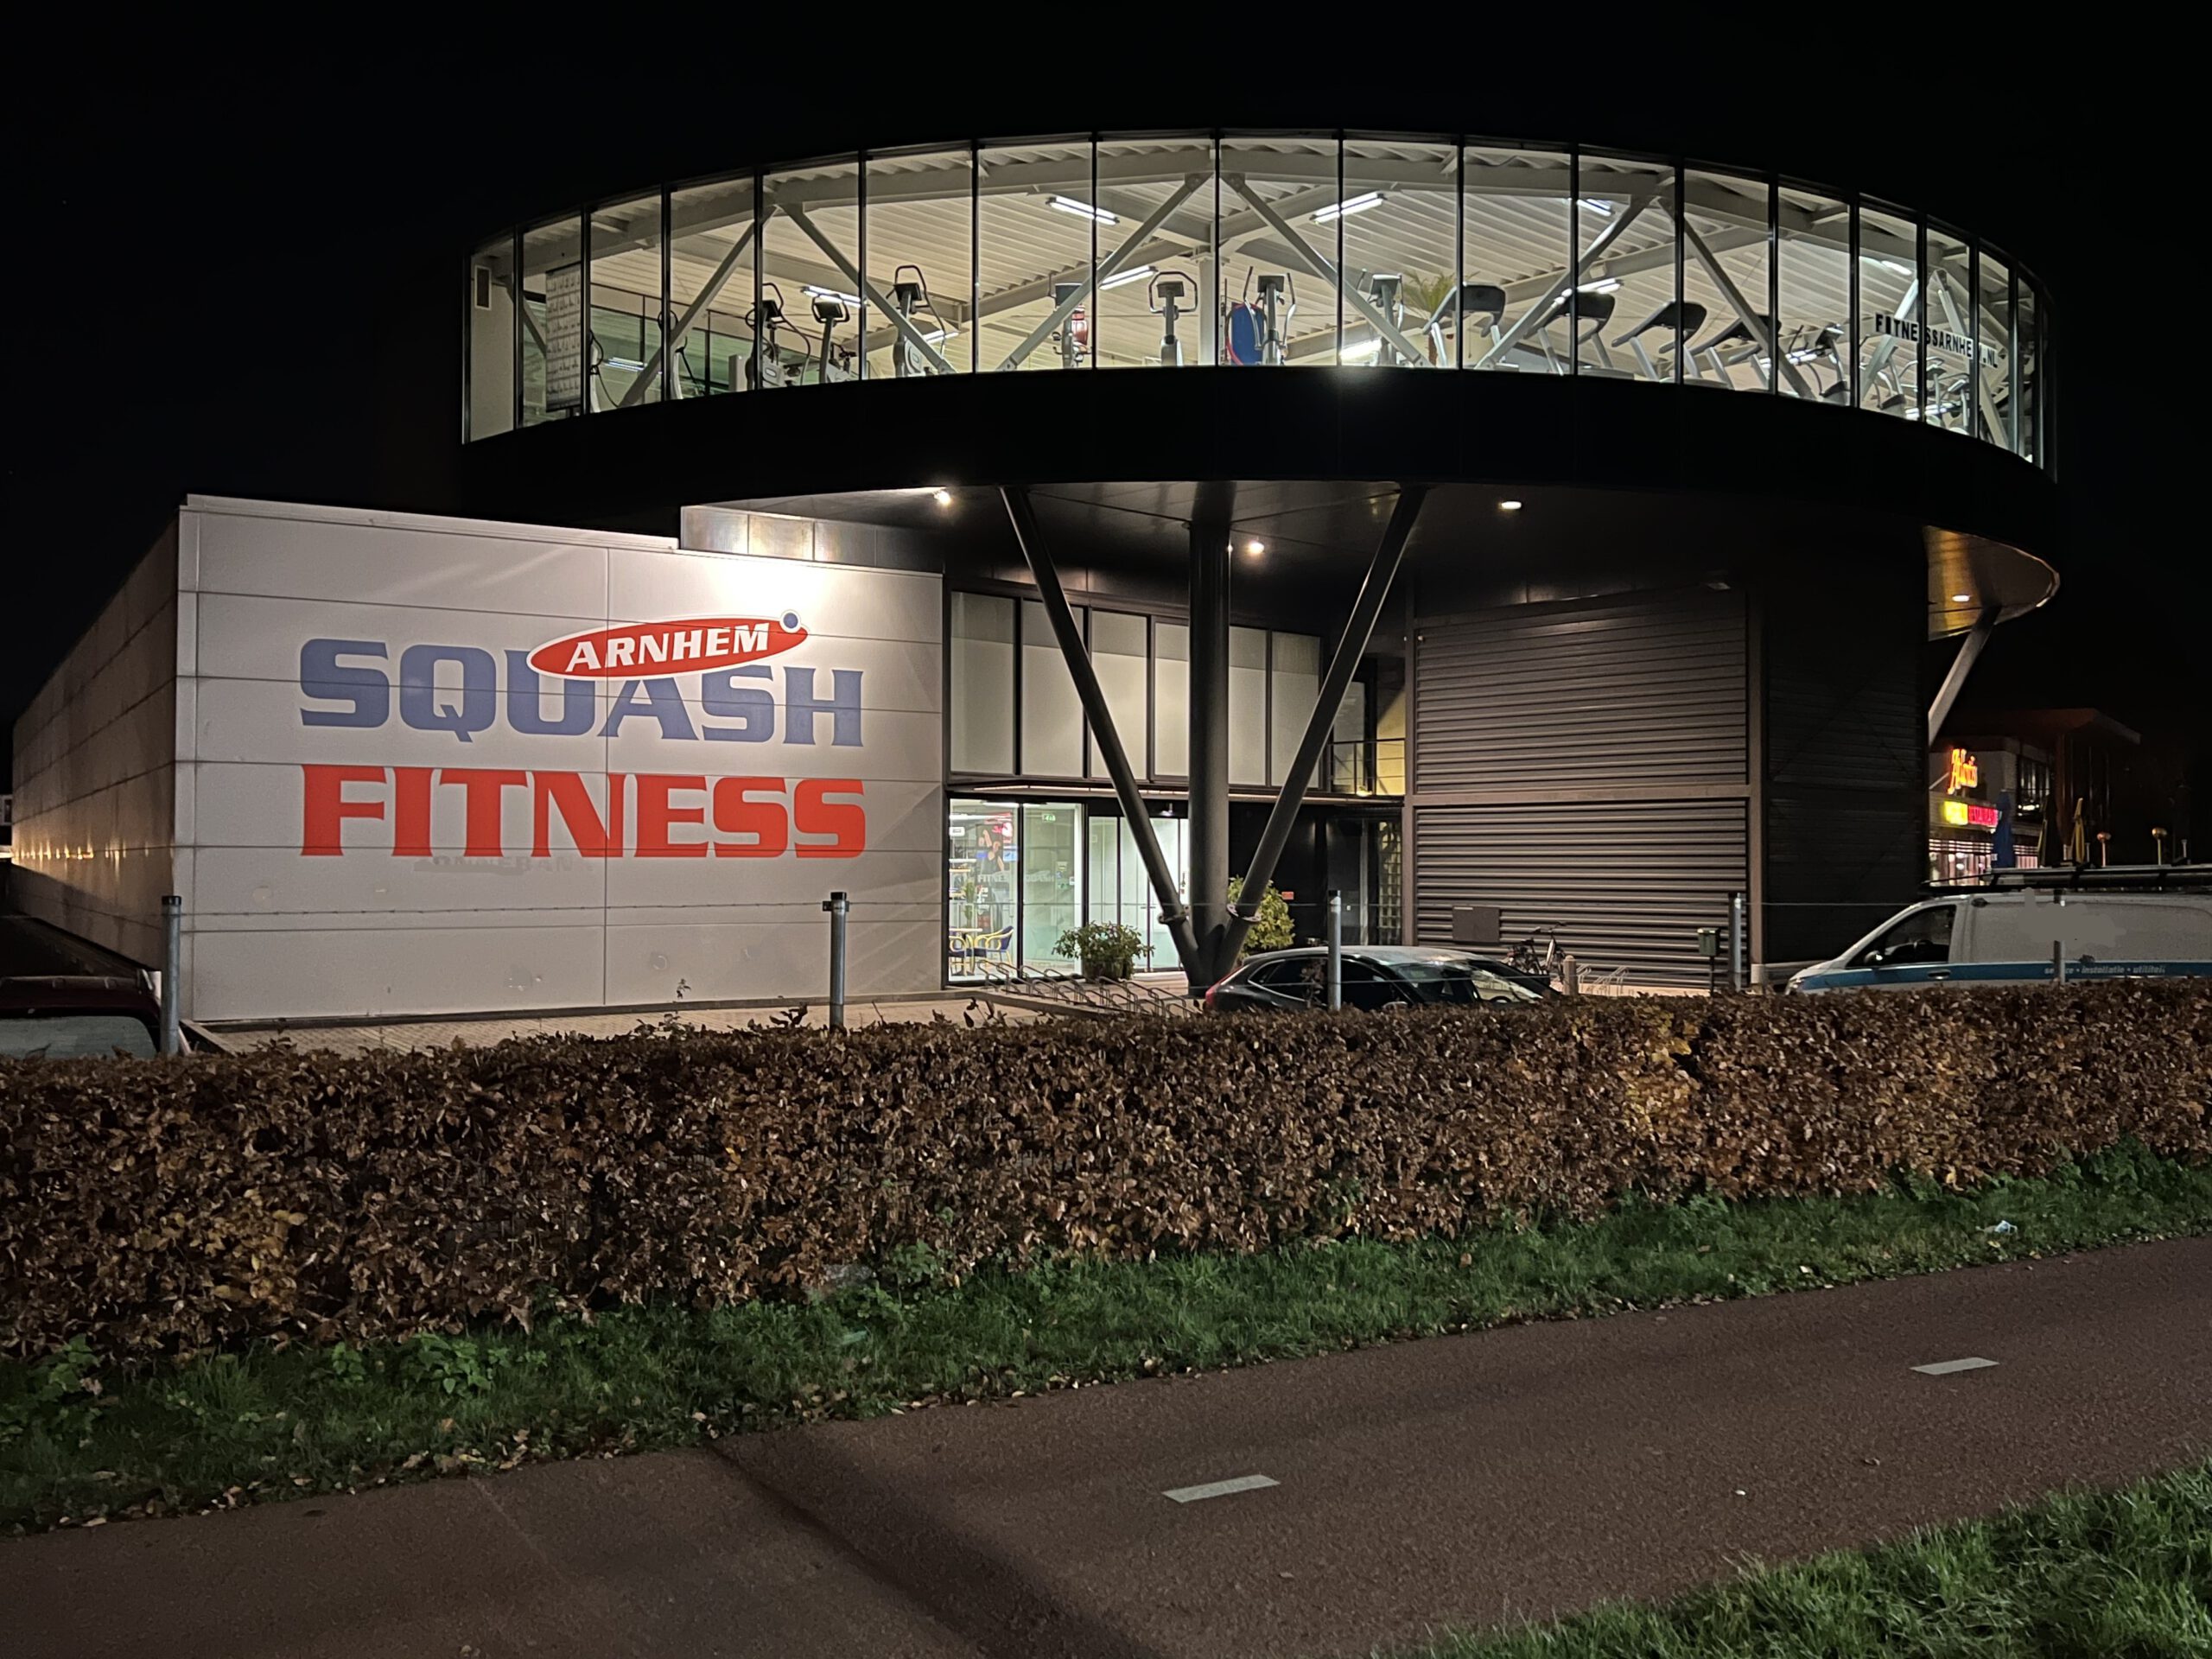 Squash fitness centre Arnhem Sportschool